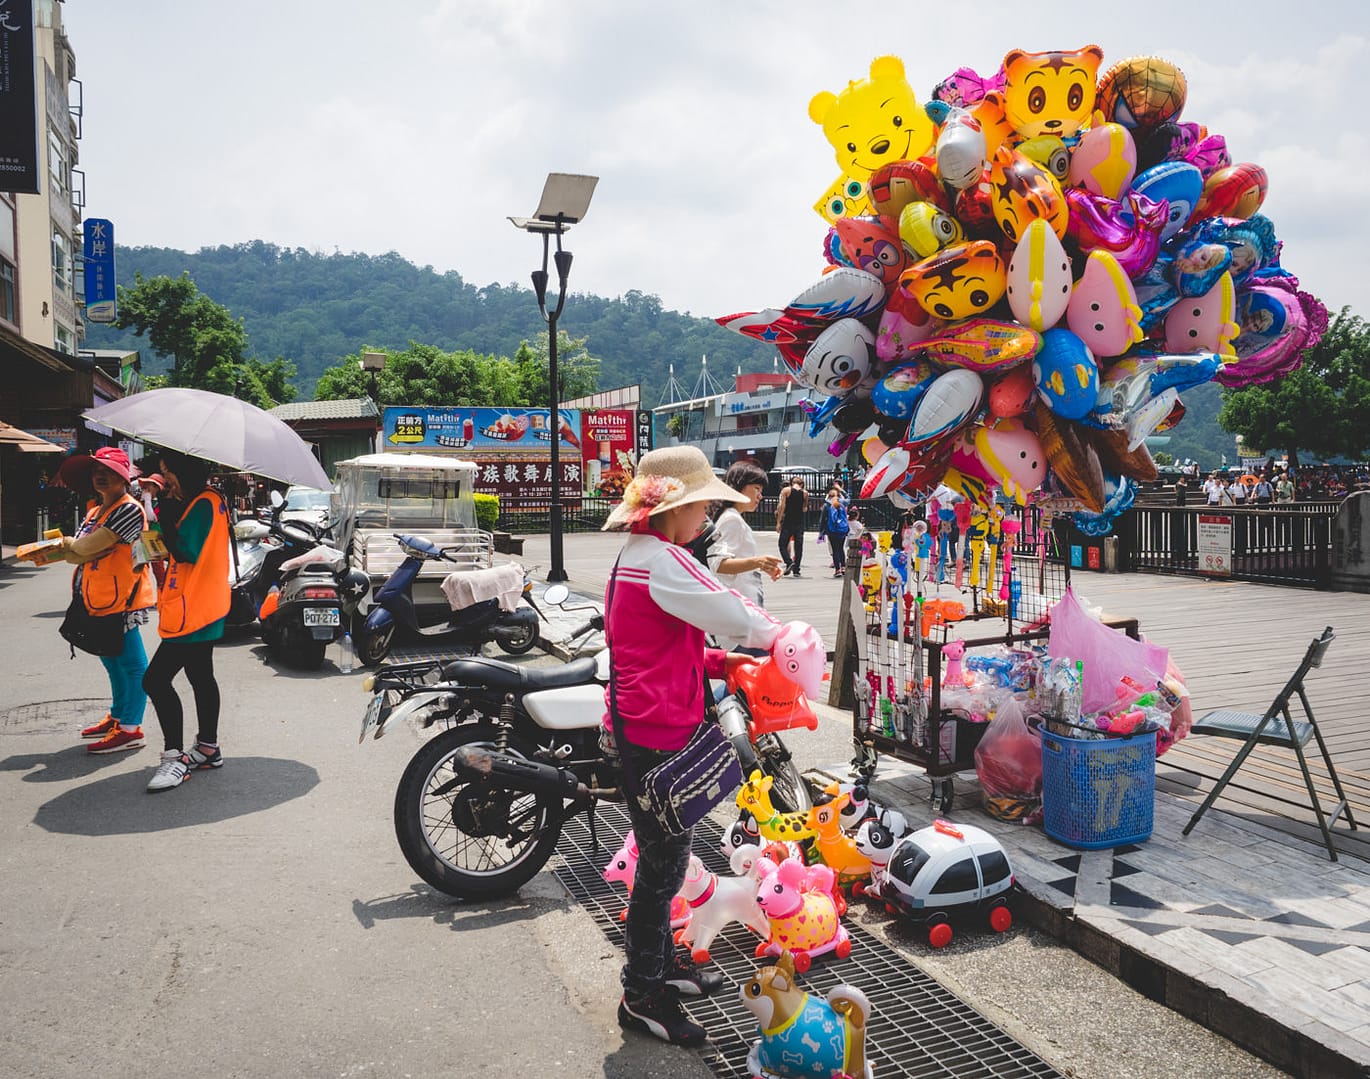 Taiwan - Nantou City - Random popup stall selling balloon